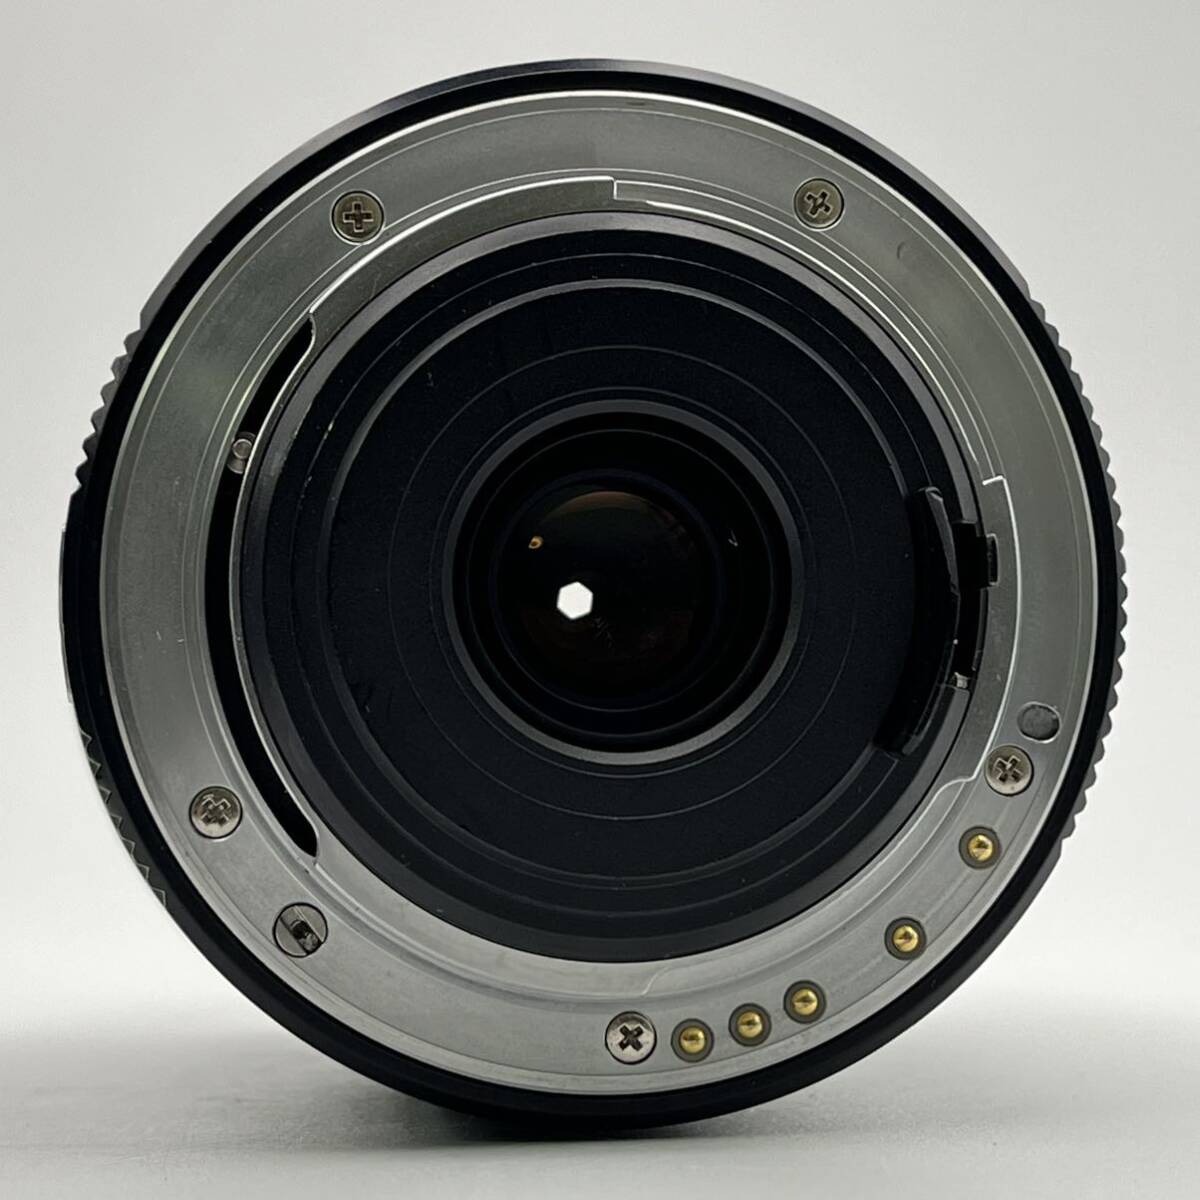 PENTAX K100D Pentax digital single‐lens reflex camera approximately 610 ten thousand pixels CCD sensor installing / smc PENTAX-DA 50-200mmF4-5.6 ED seeing at distance zoom lens 